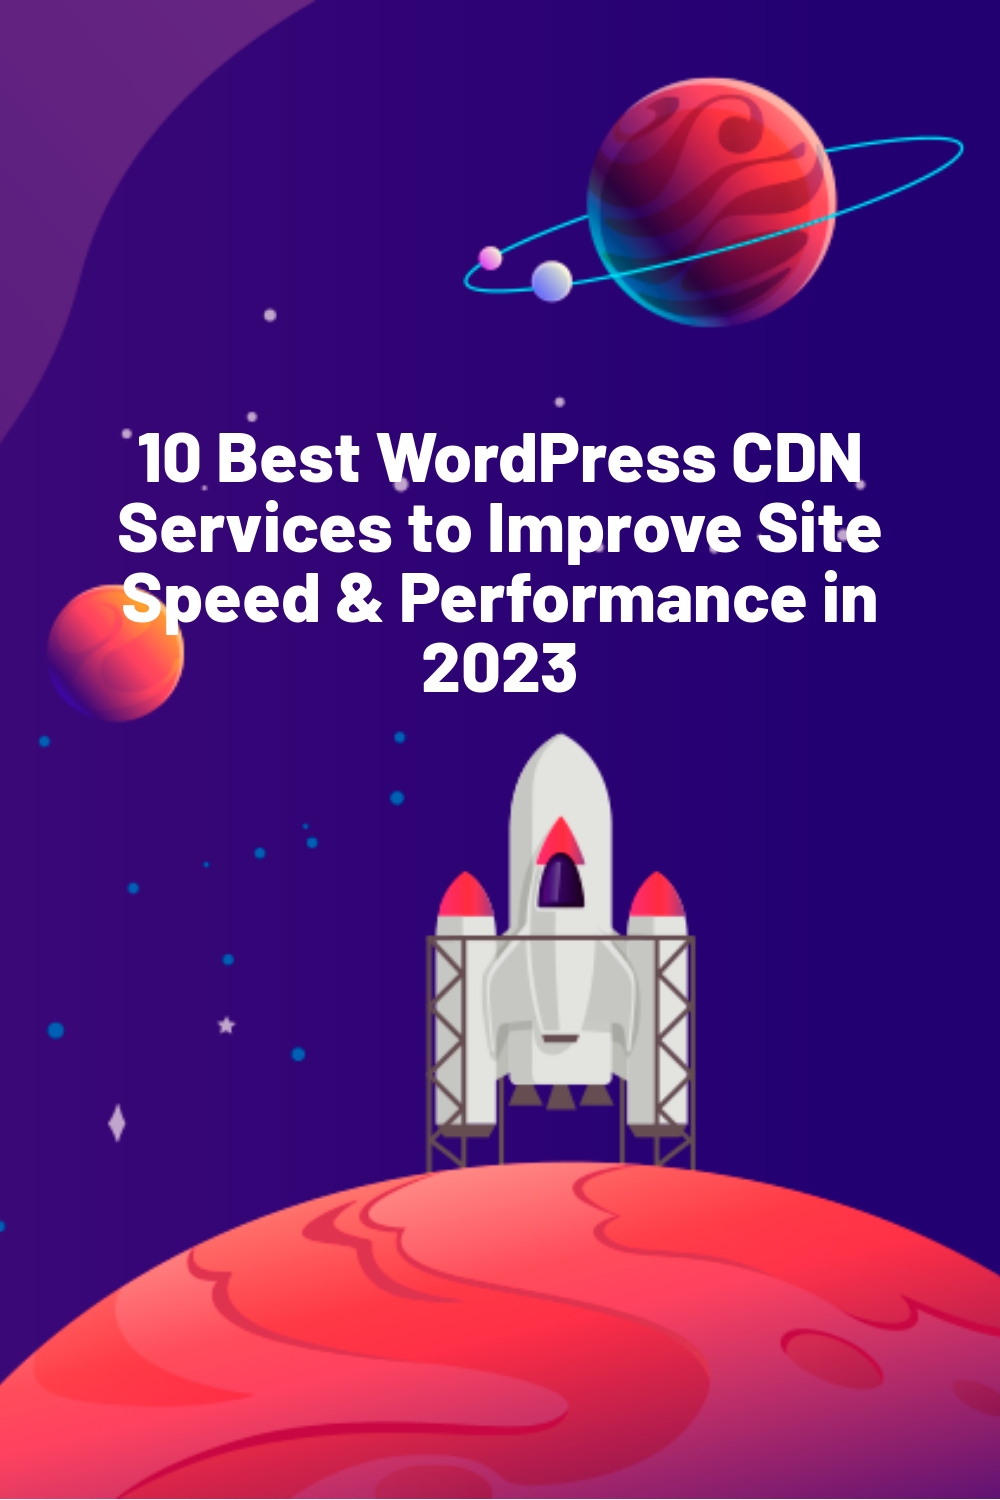 10 Best WordPress CDN Services to Improve Site Speed & Performance in 2023